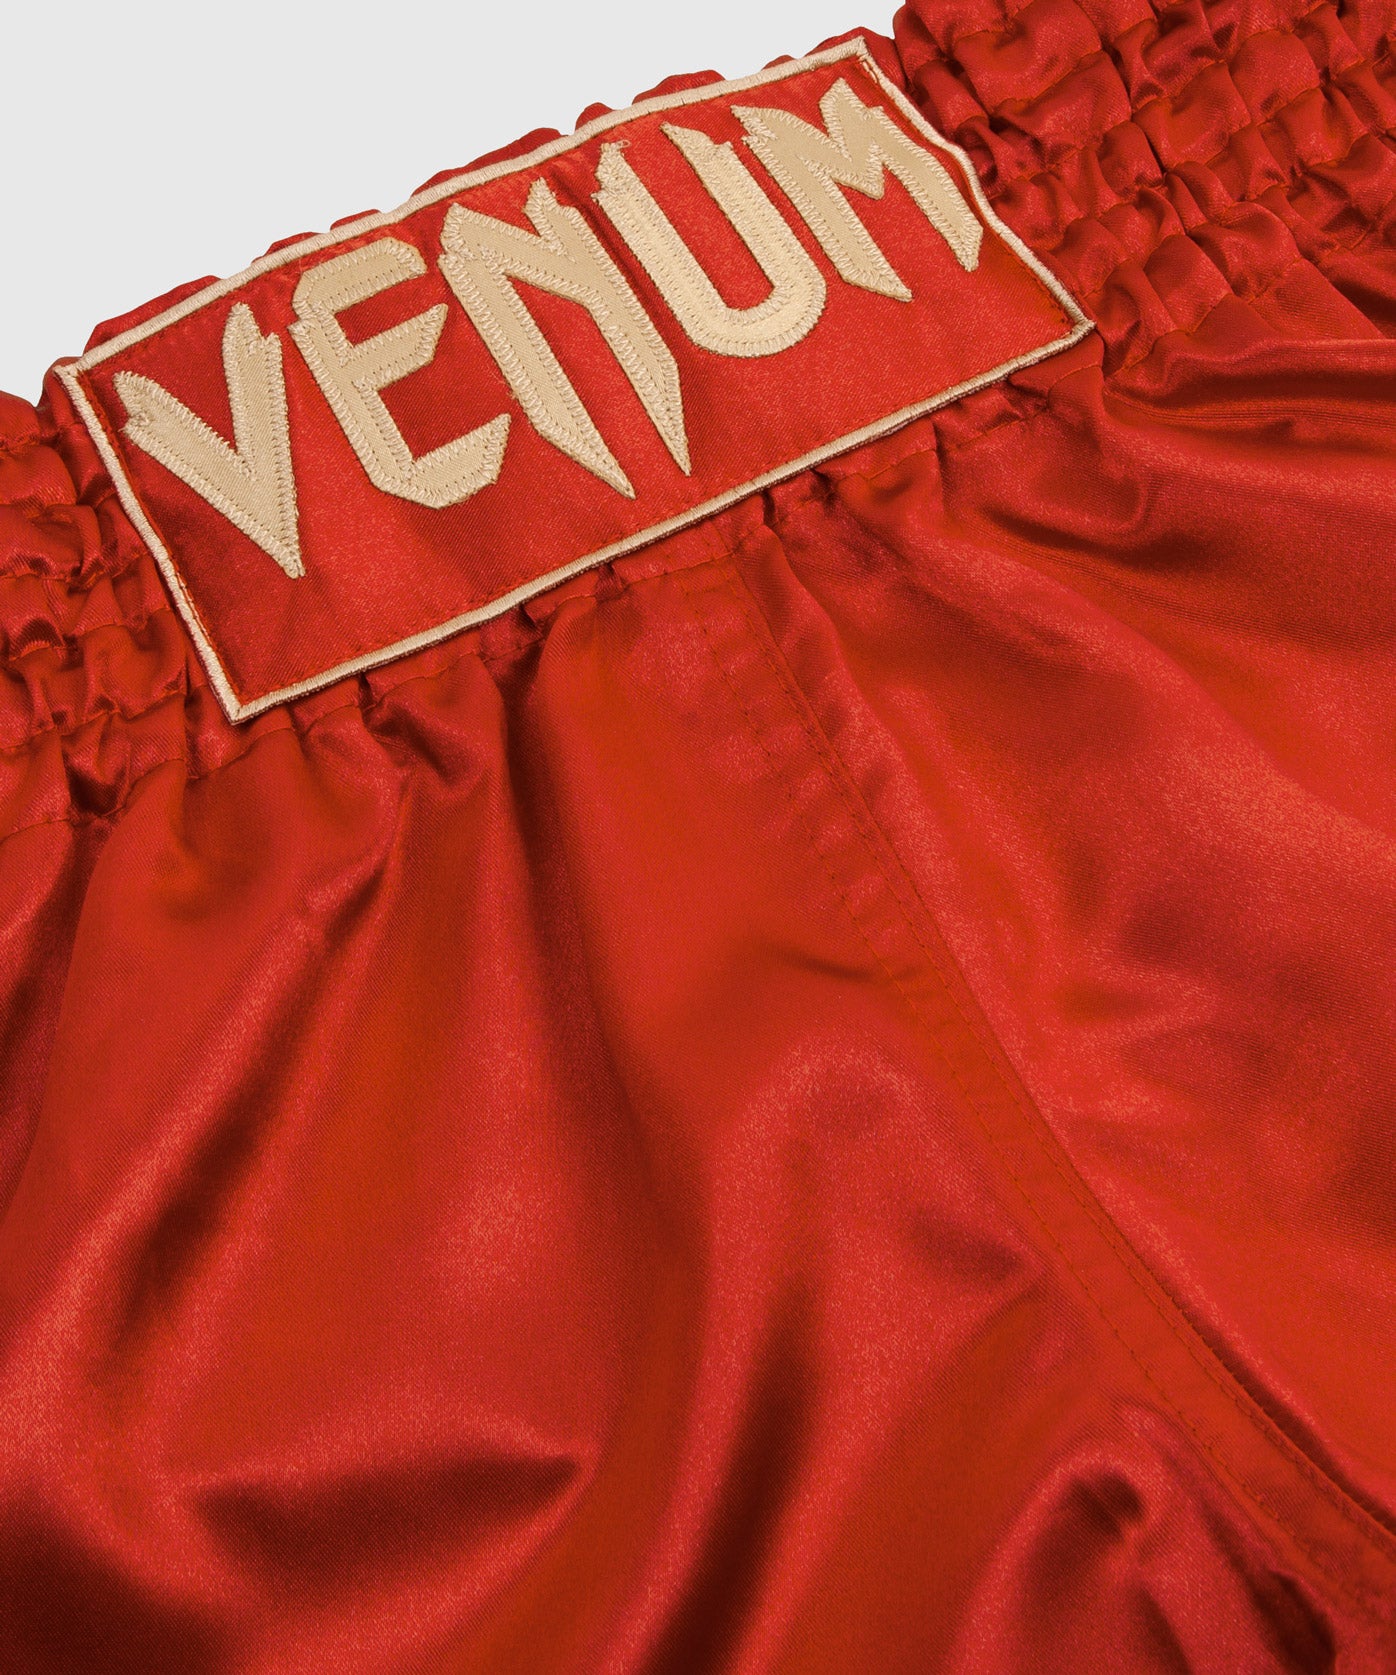 Venum Muay Thai Shorts Classic - Bordeauxrood/Goud